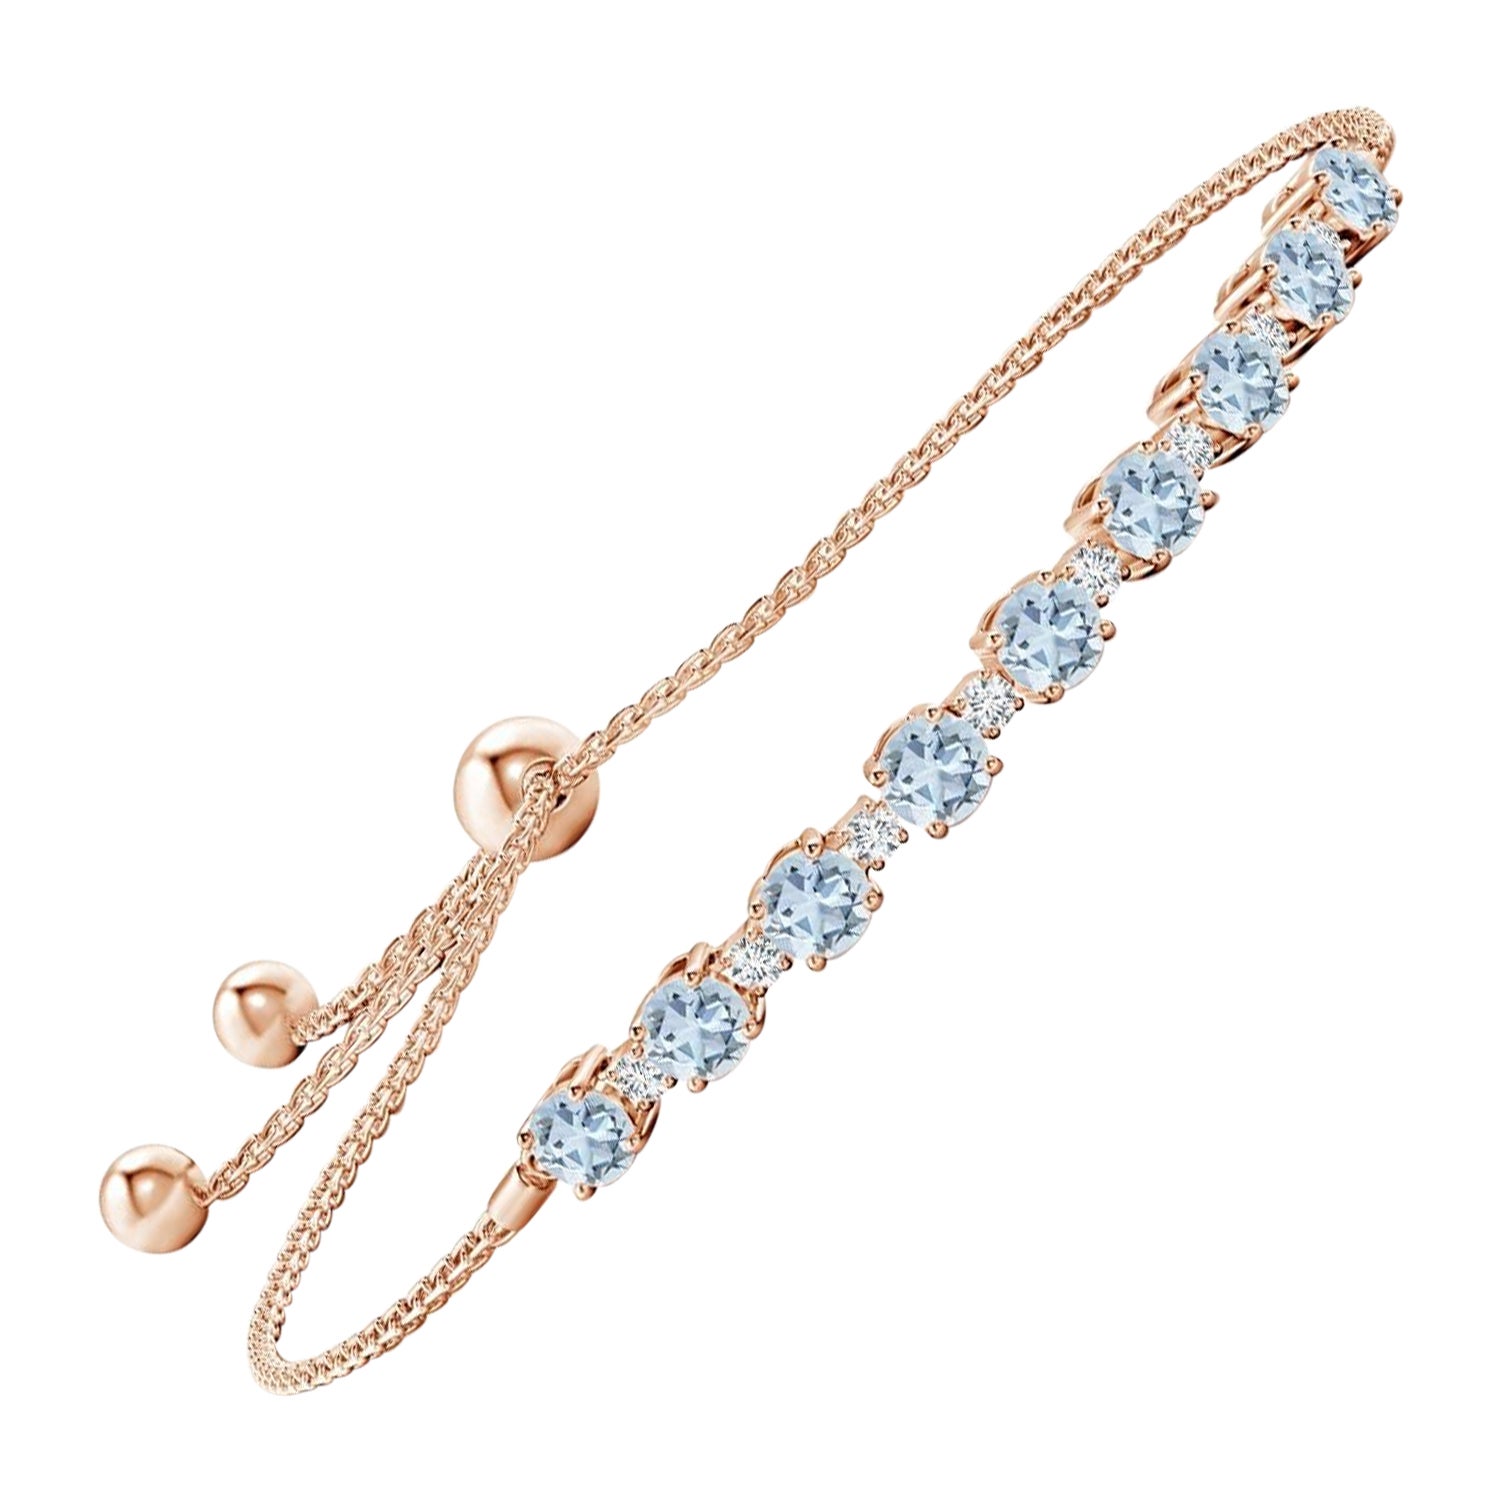 Natural 1.8ct Aquamarine and Diamond Tennis Bracelet in 14K Rose Gold